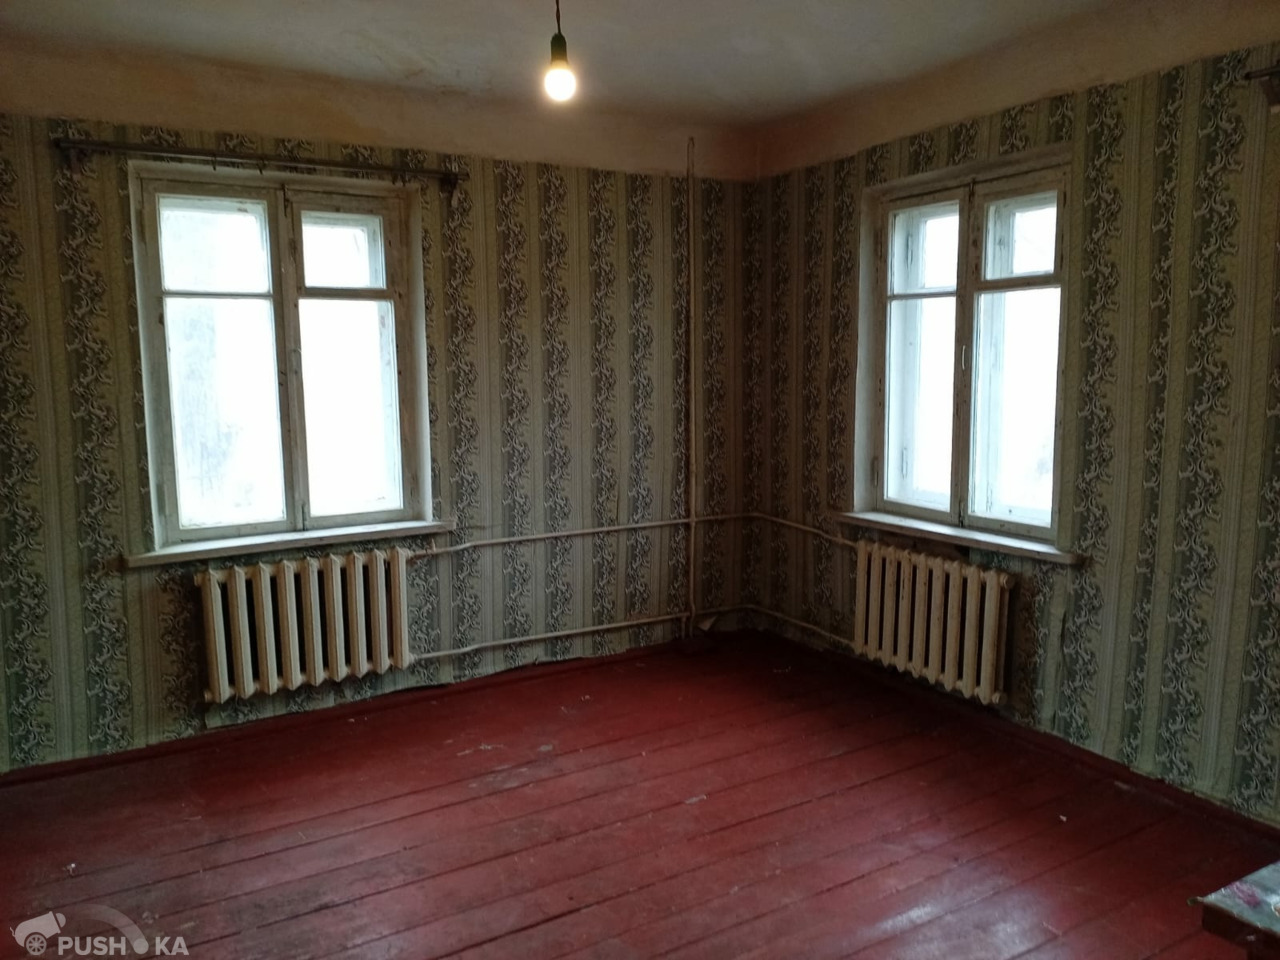 Продаётся 1-комнатная квартира 32.5 кв.м. этаж 2/2 за 1 150 000 руб 